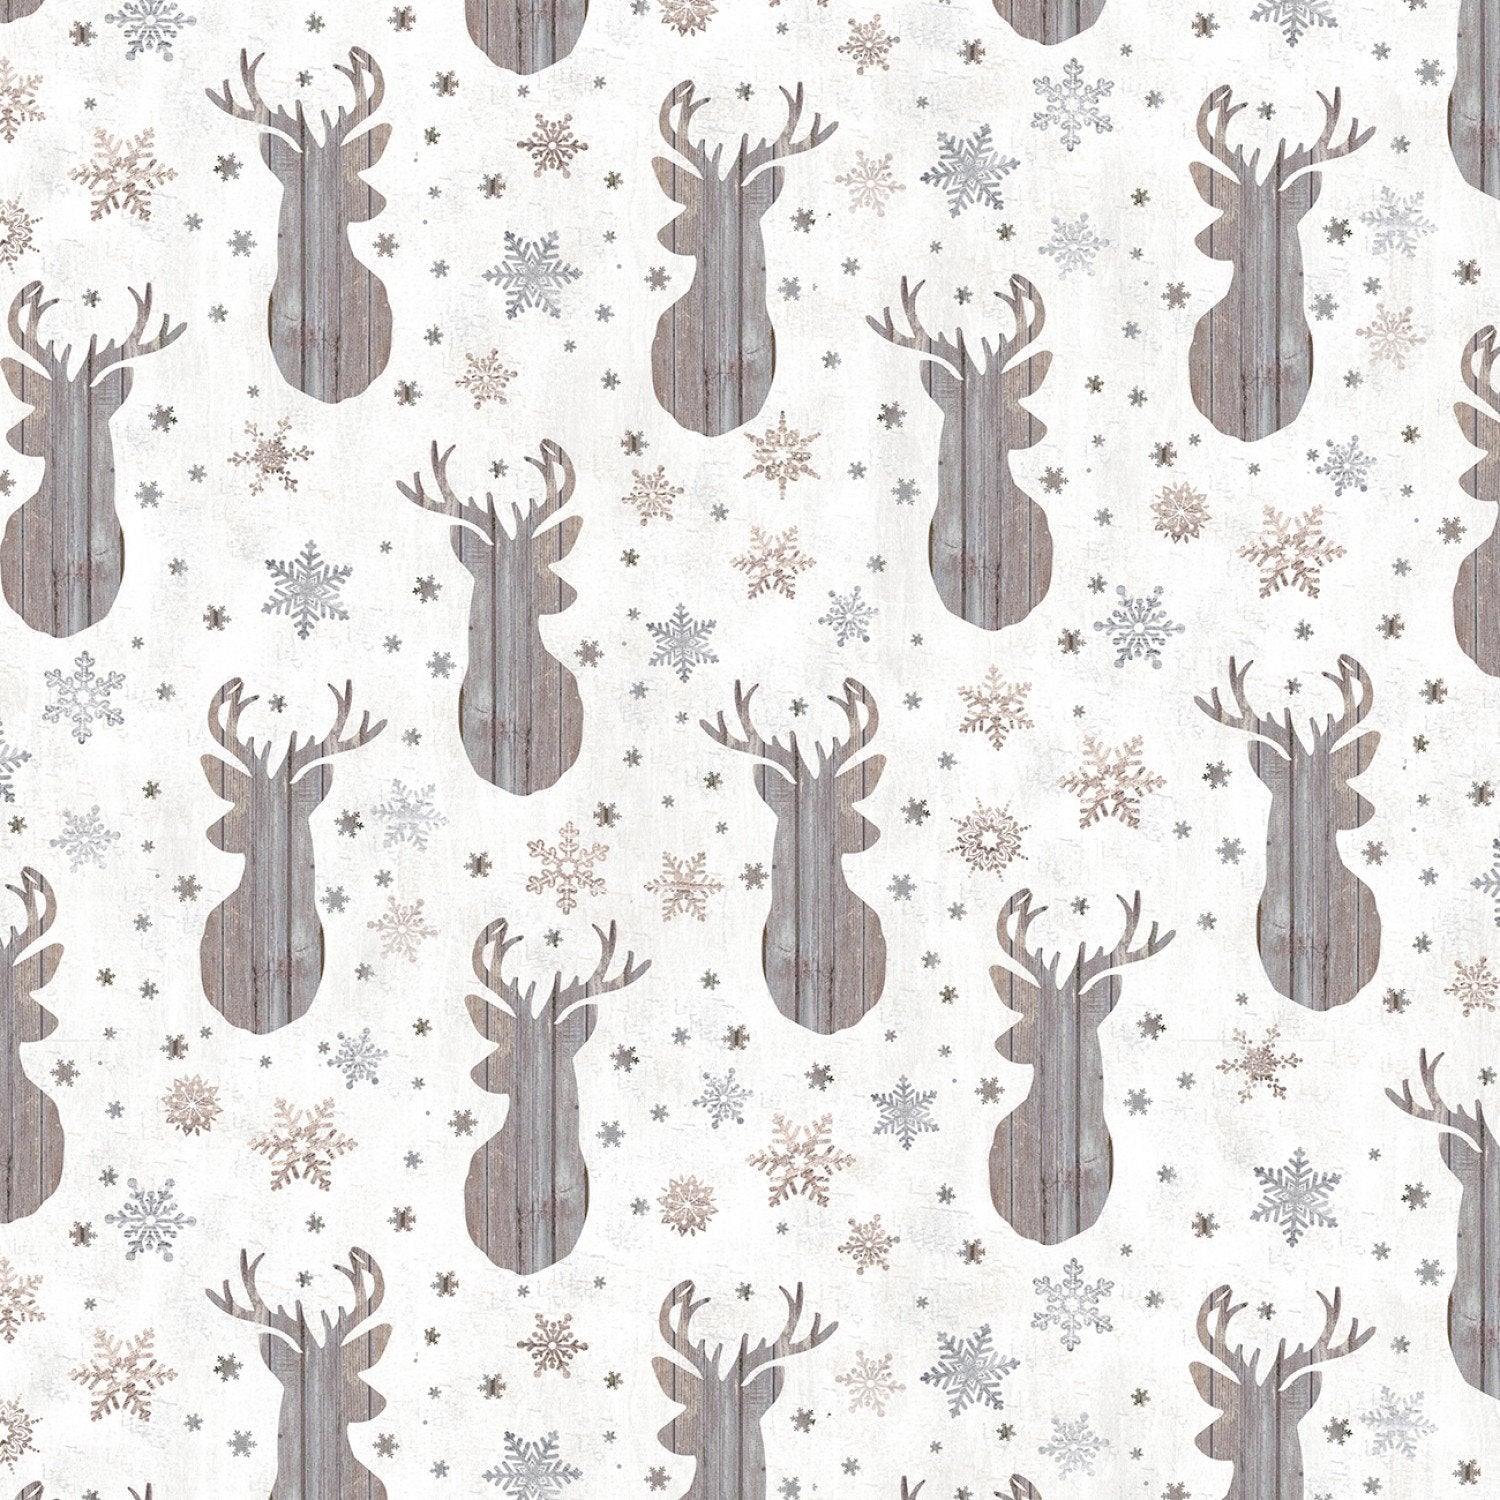 Deer fabric C7475 cream snowflake fabric